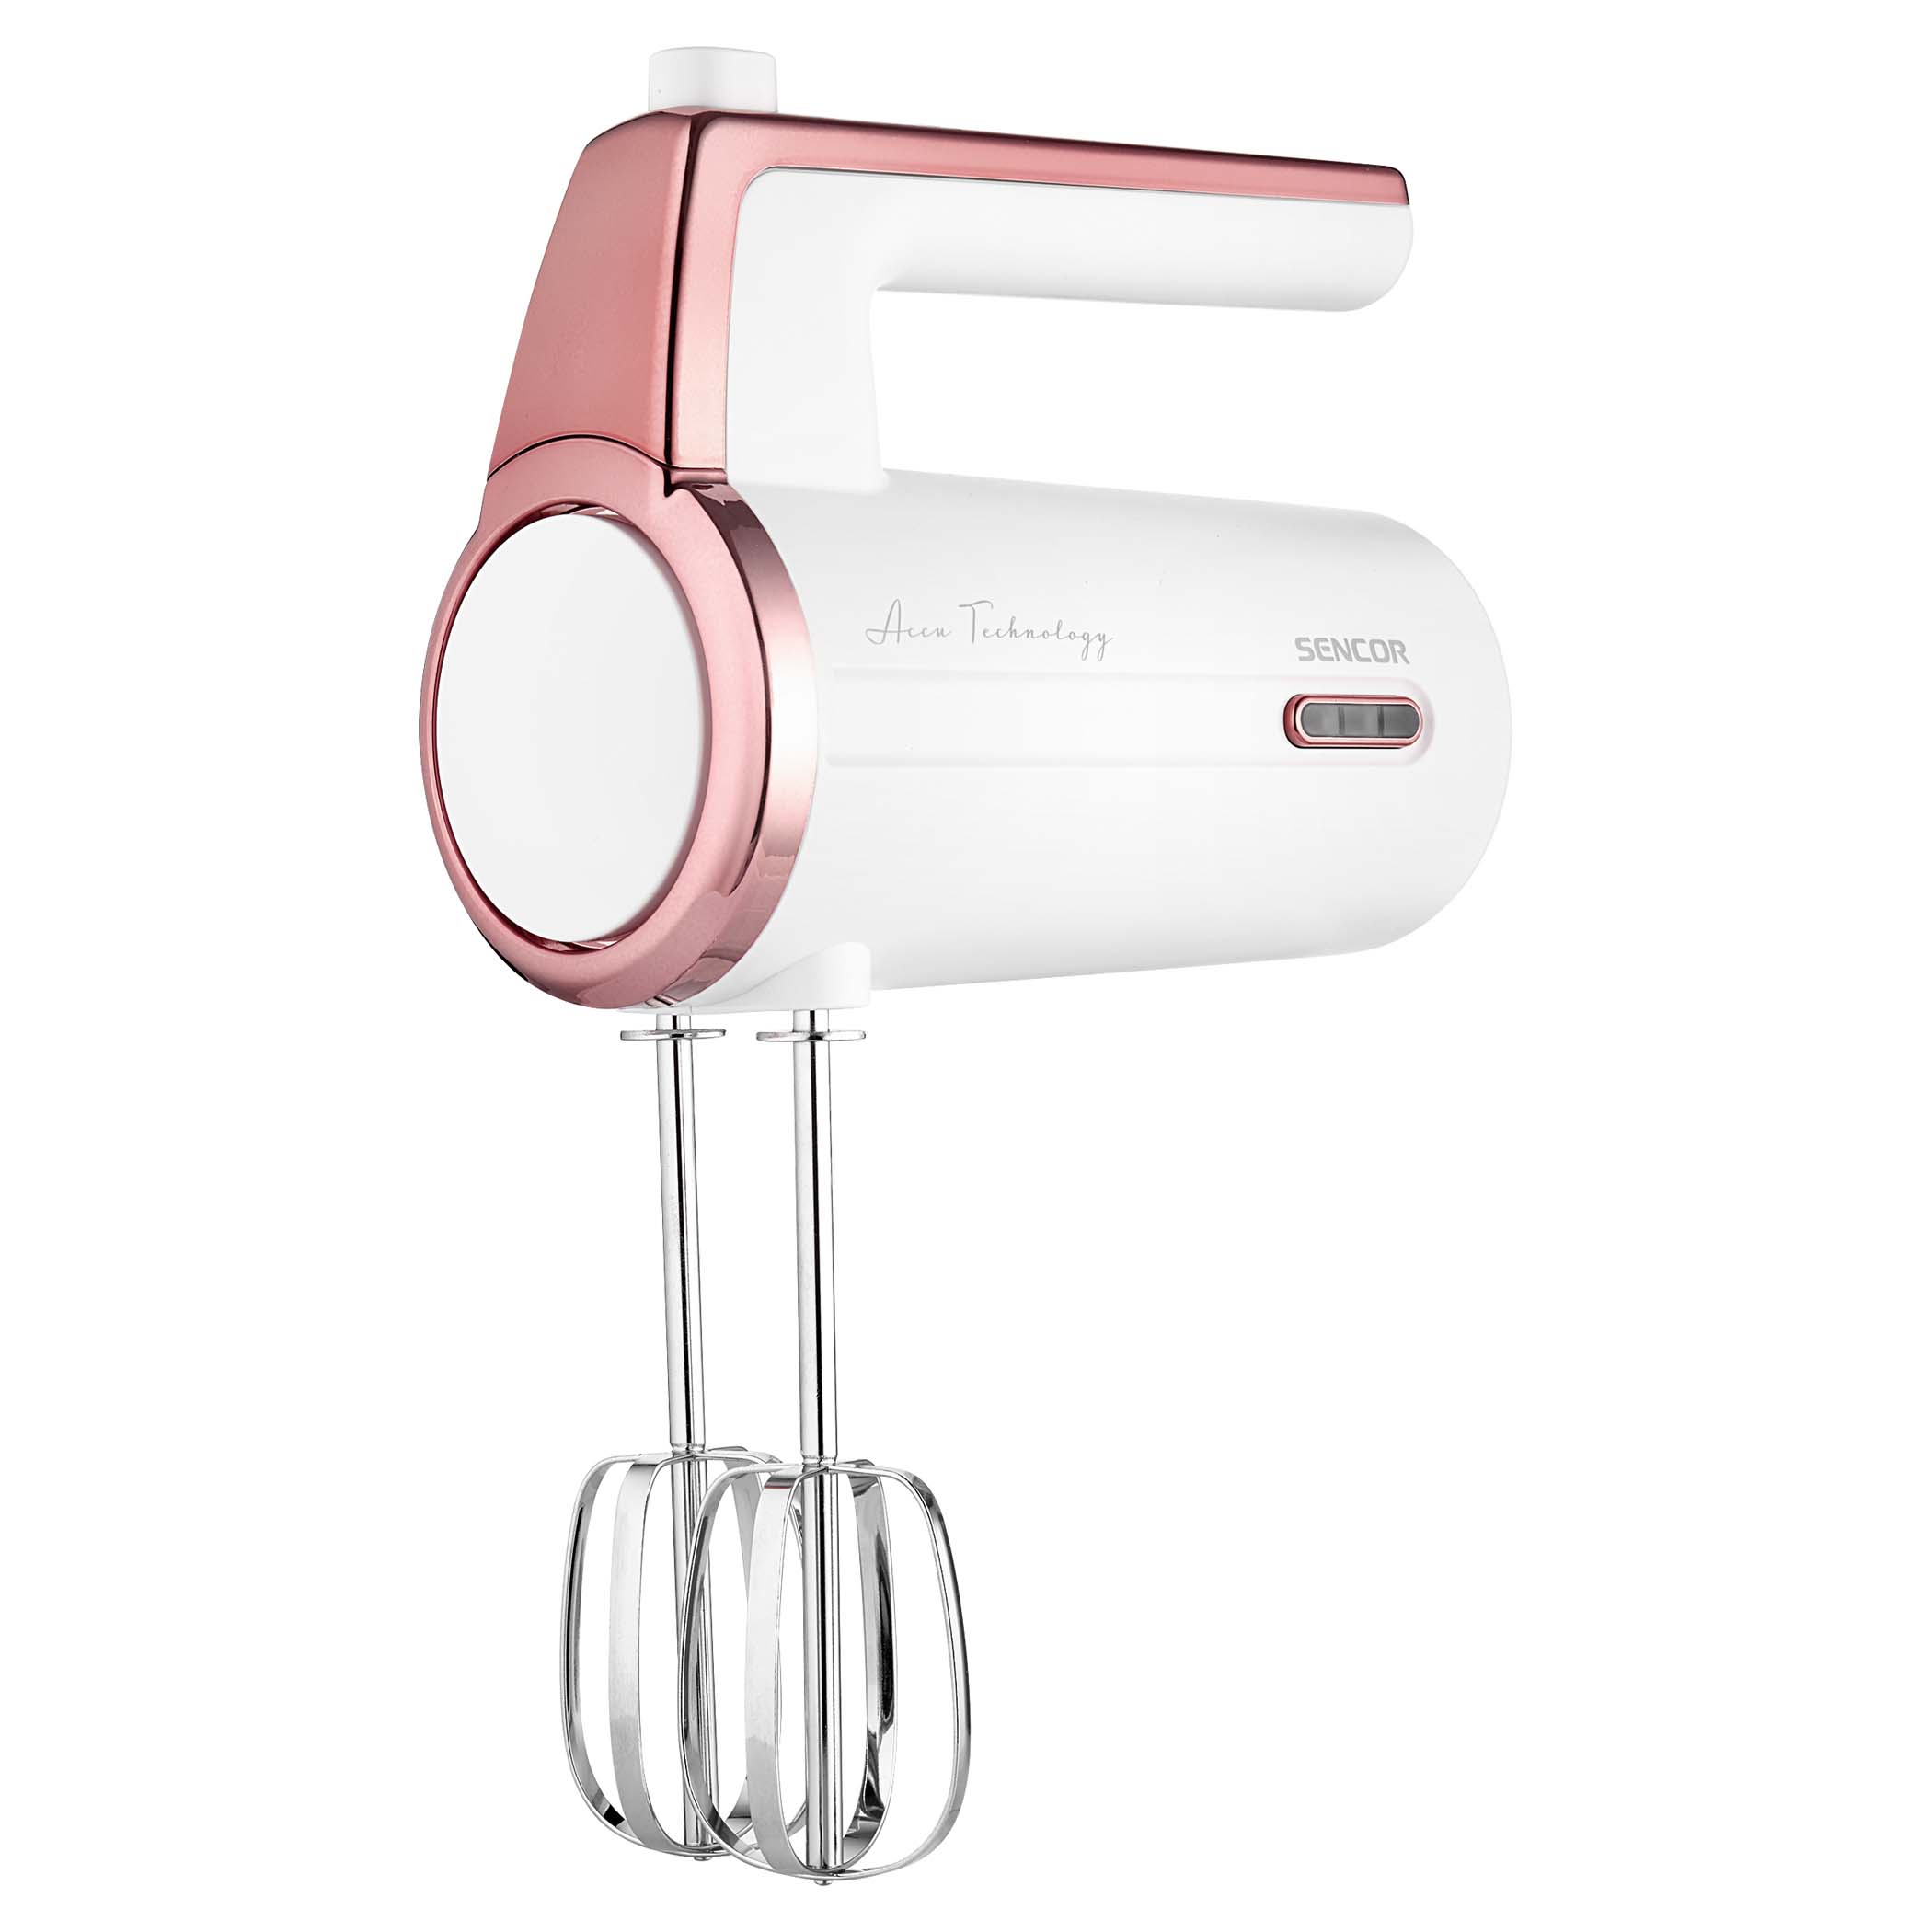 (Light Pink)Hand Mixer Cordless USB Rechargeable Flat Bottom Handheld Mixer